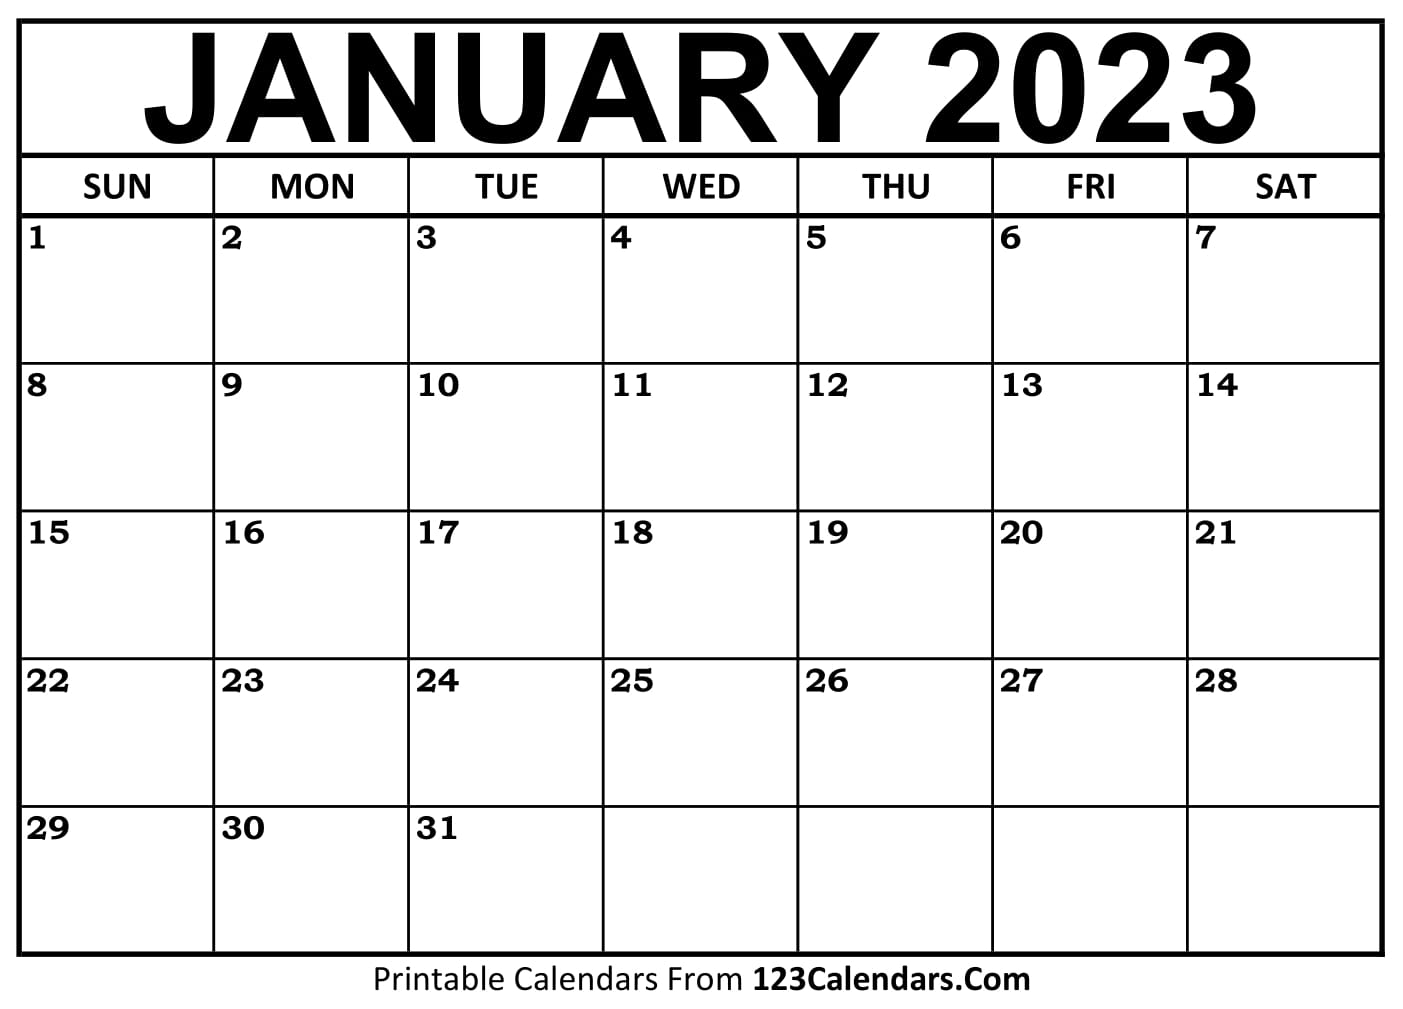 january 2023 calendar free printable calendar - printable january 2023 calendar templates 123calendarscom | january 2023 printable calendar free